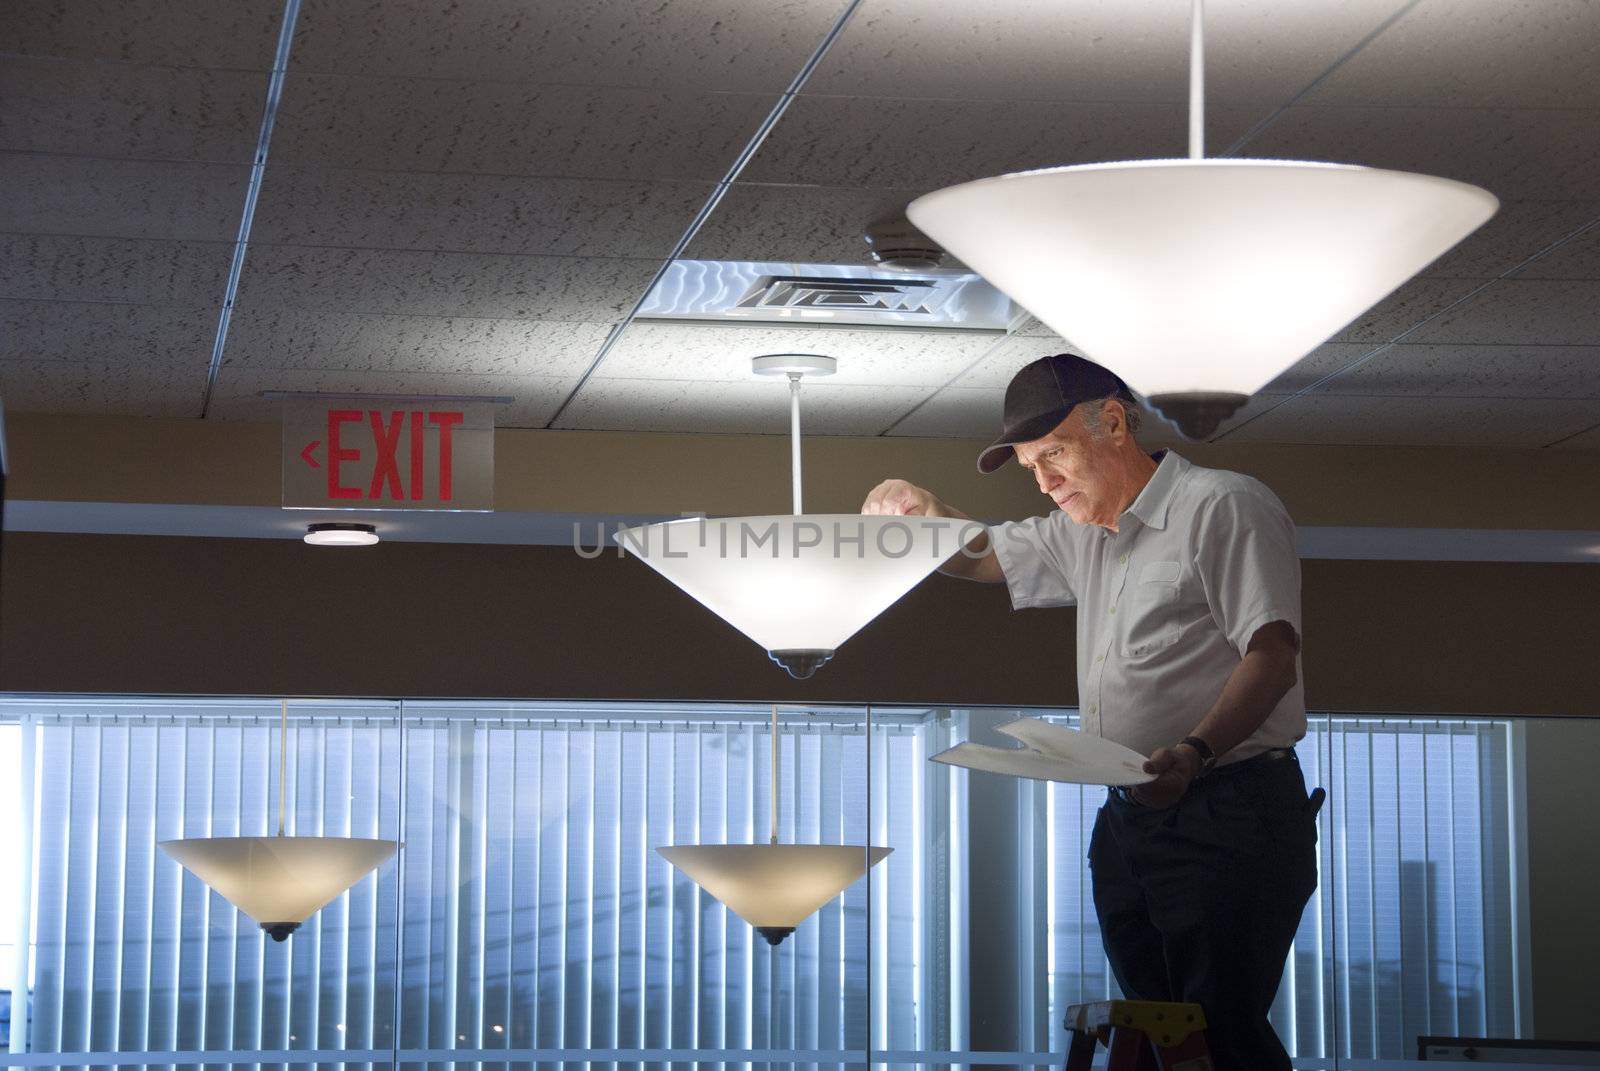 Maintenance man changing light bulbs in business office